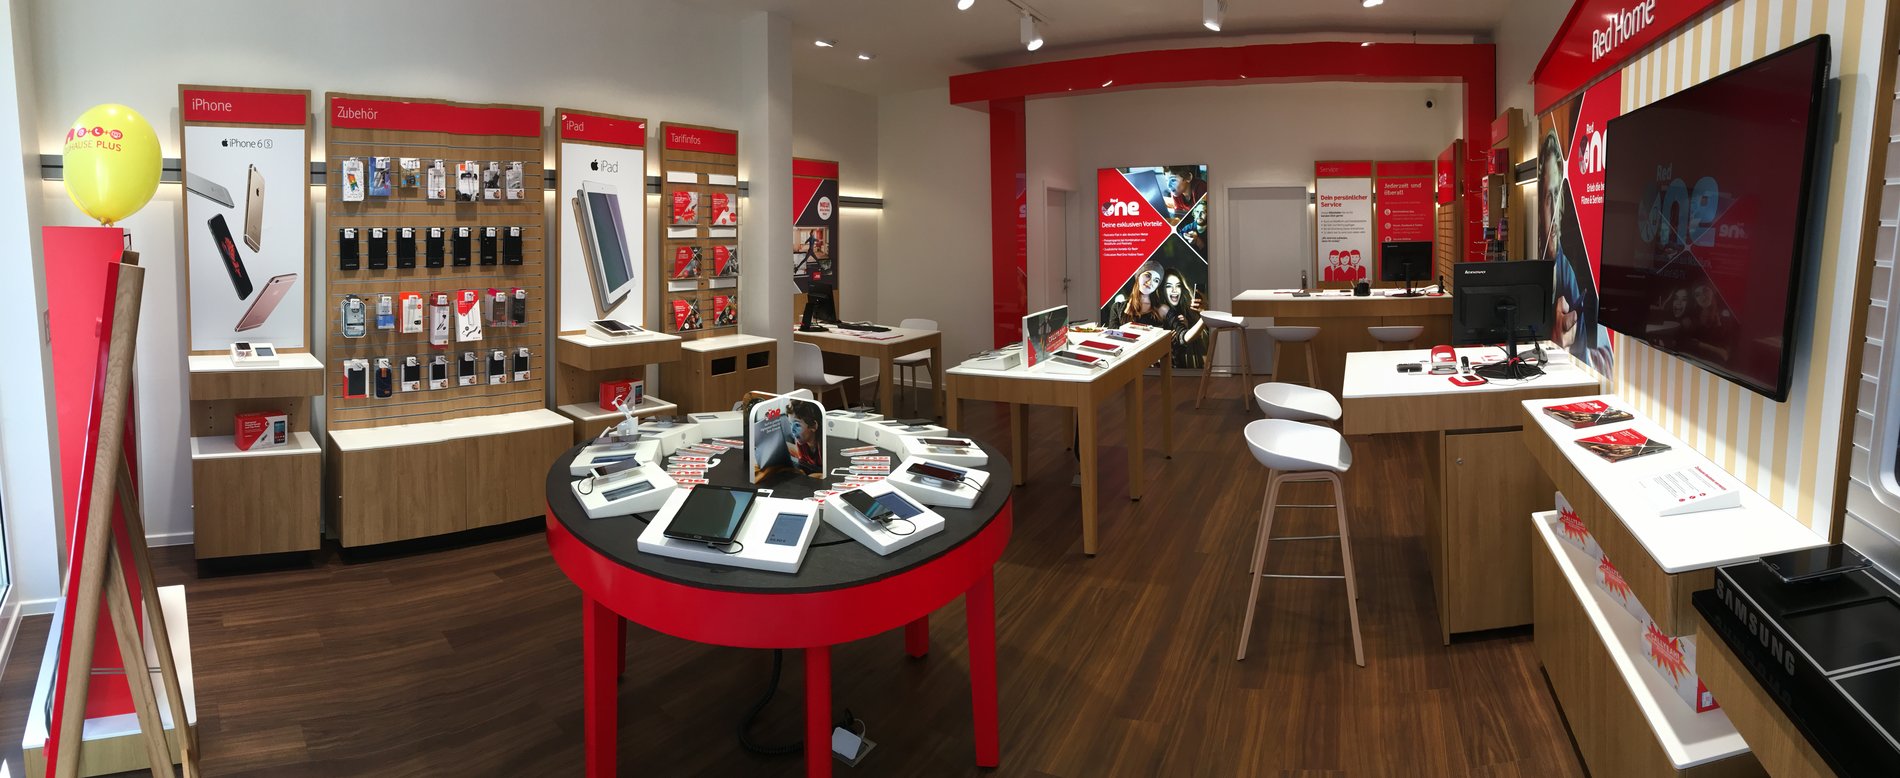 Vodafone-Shop in Lingen, Lookenstr. 19